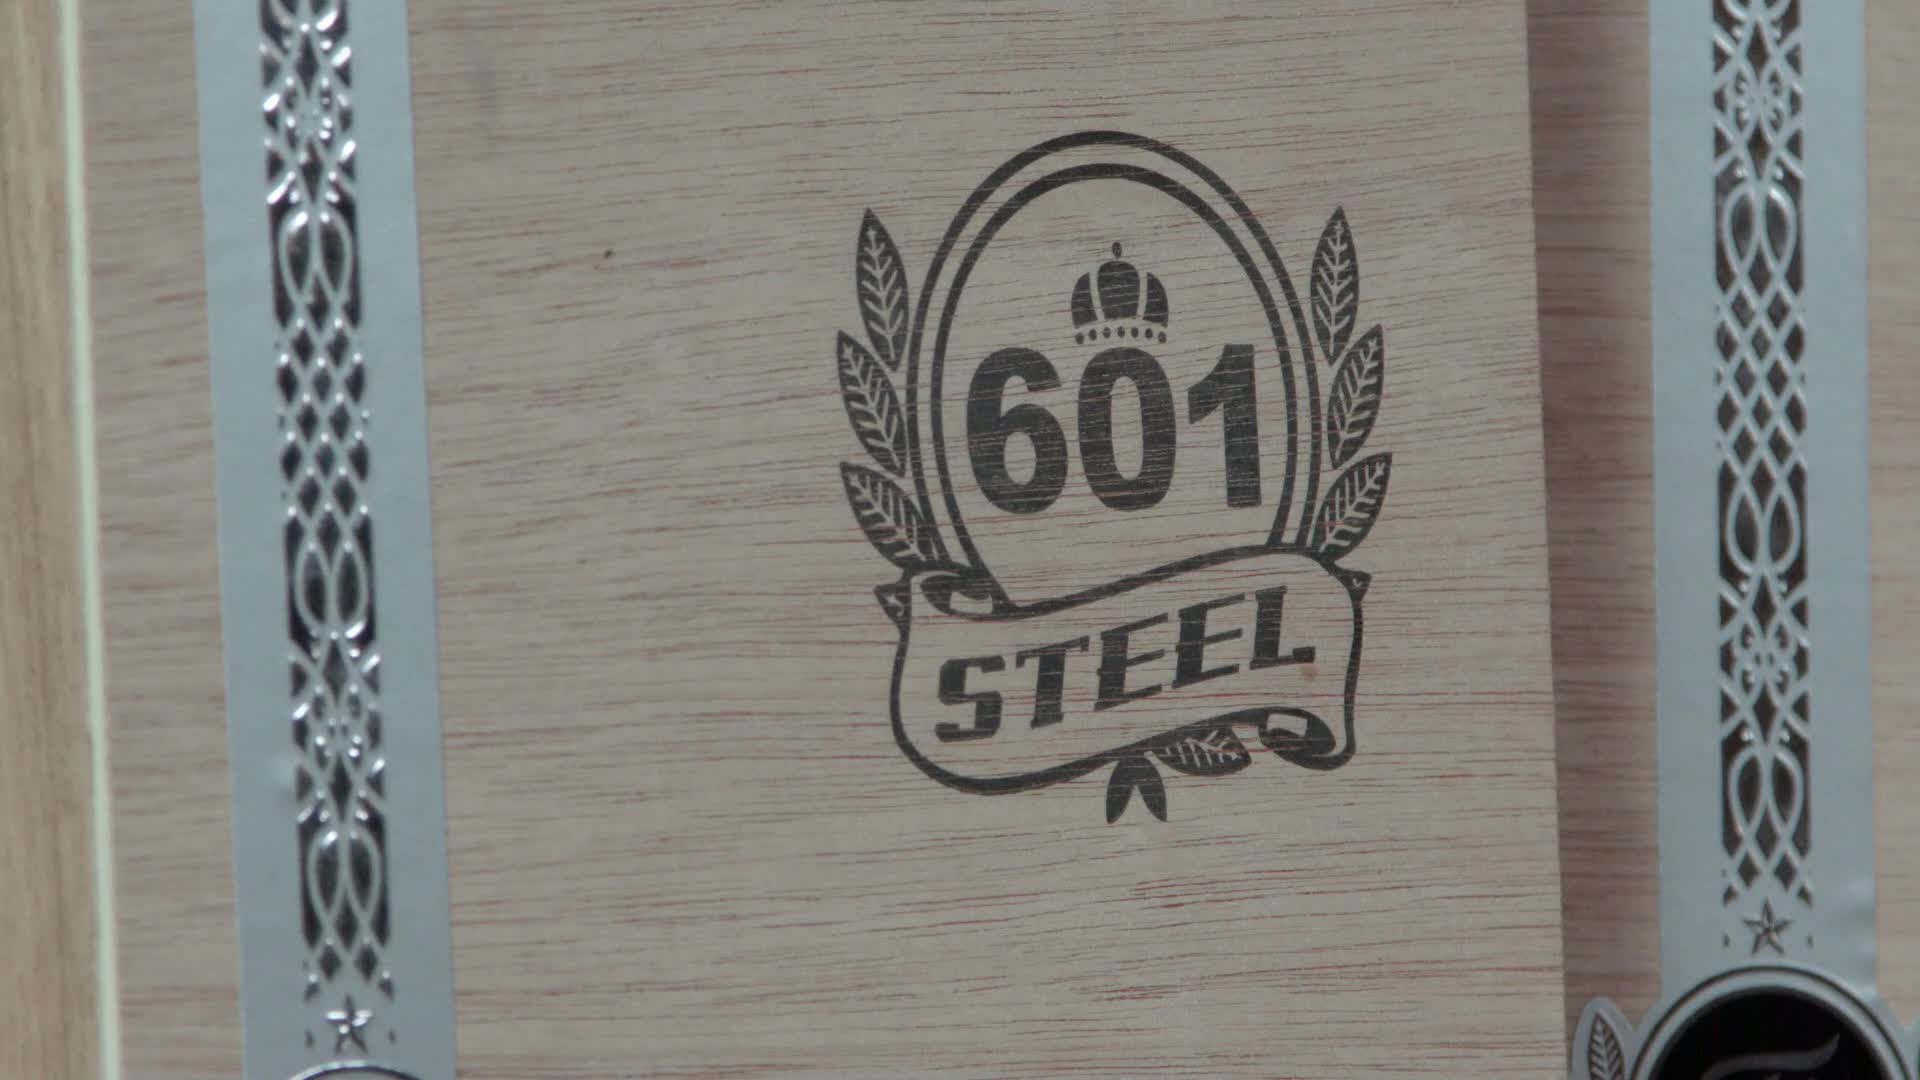 601 Steel video